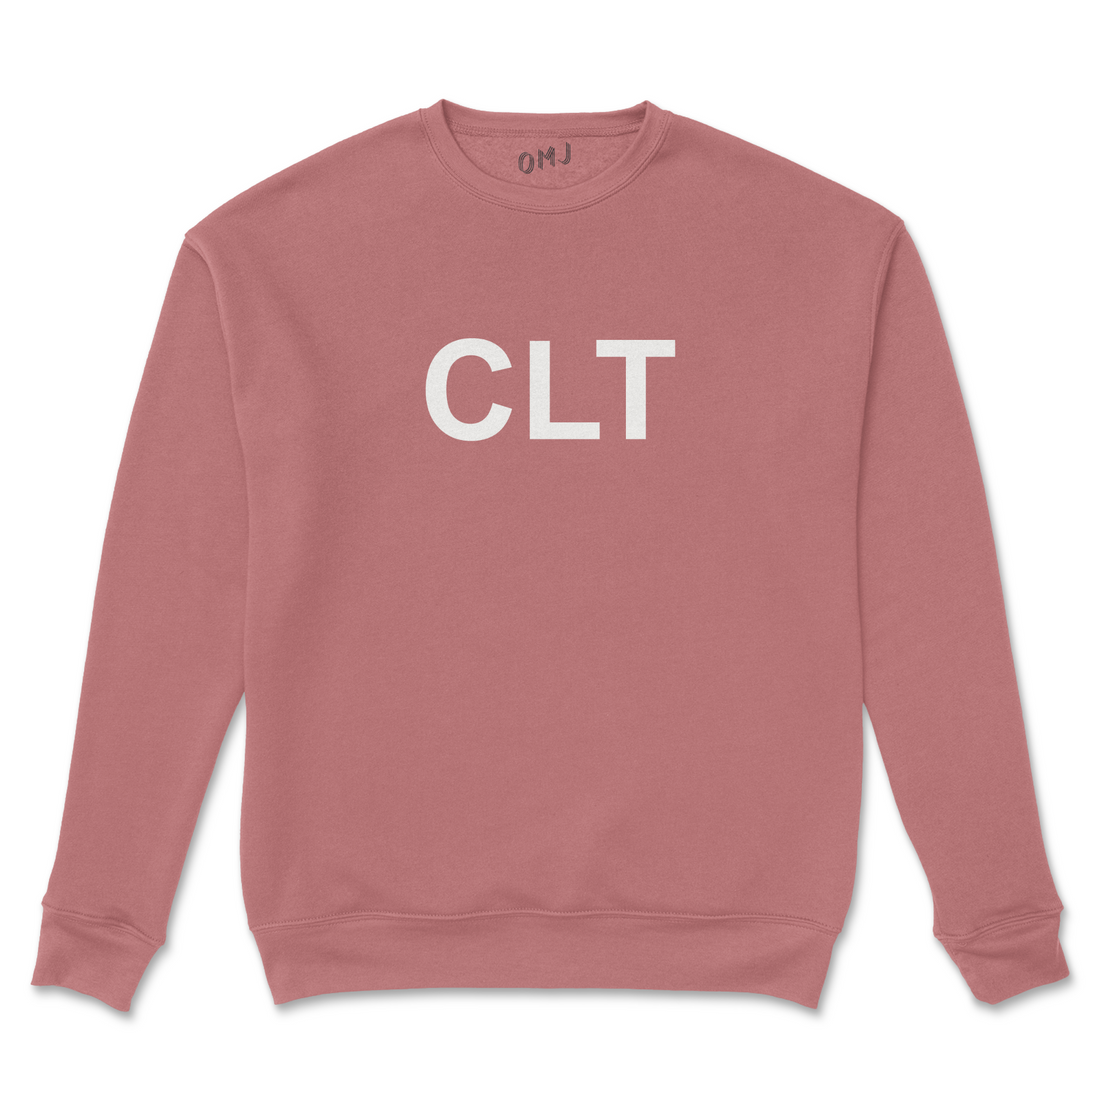 CLT Felt Letter Crewneck Sweatshirts